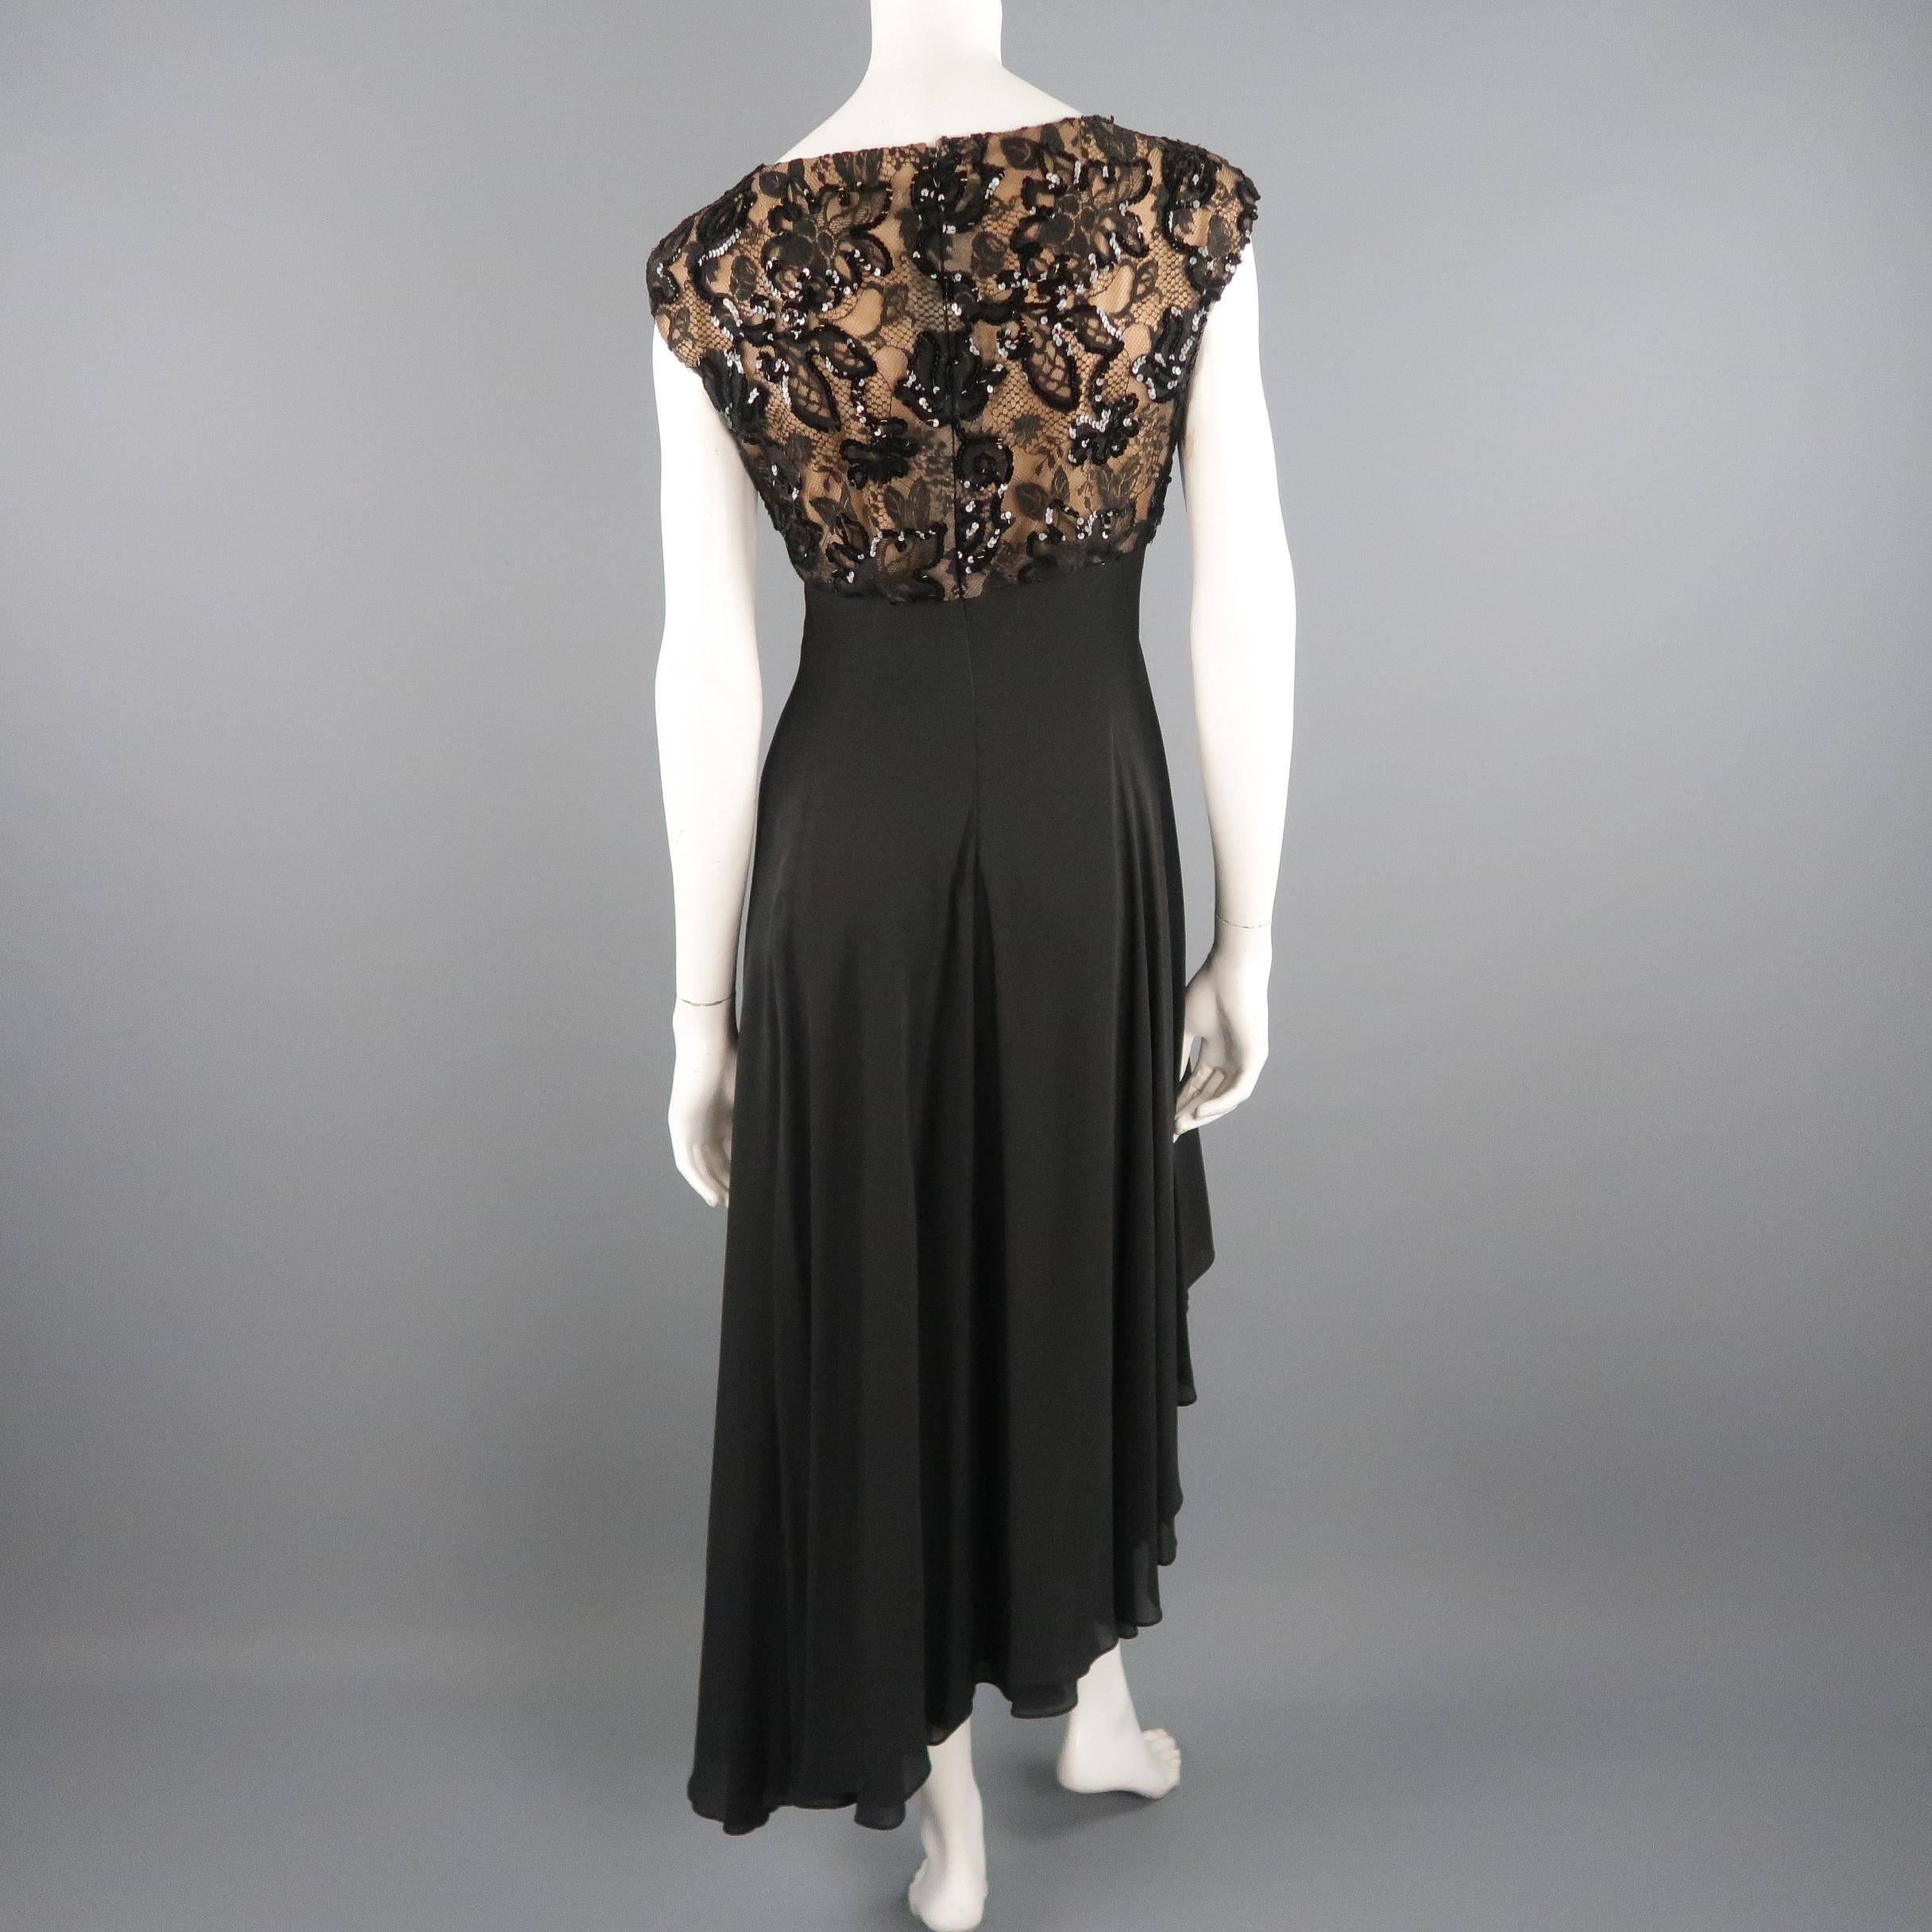 CANDICE FRAIBERGER 4 Black Sequin Lace Top Asymmetrical Skirt Cocktail Dress 1